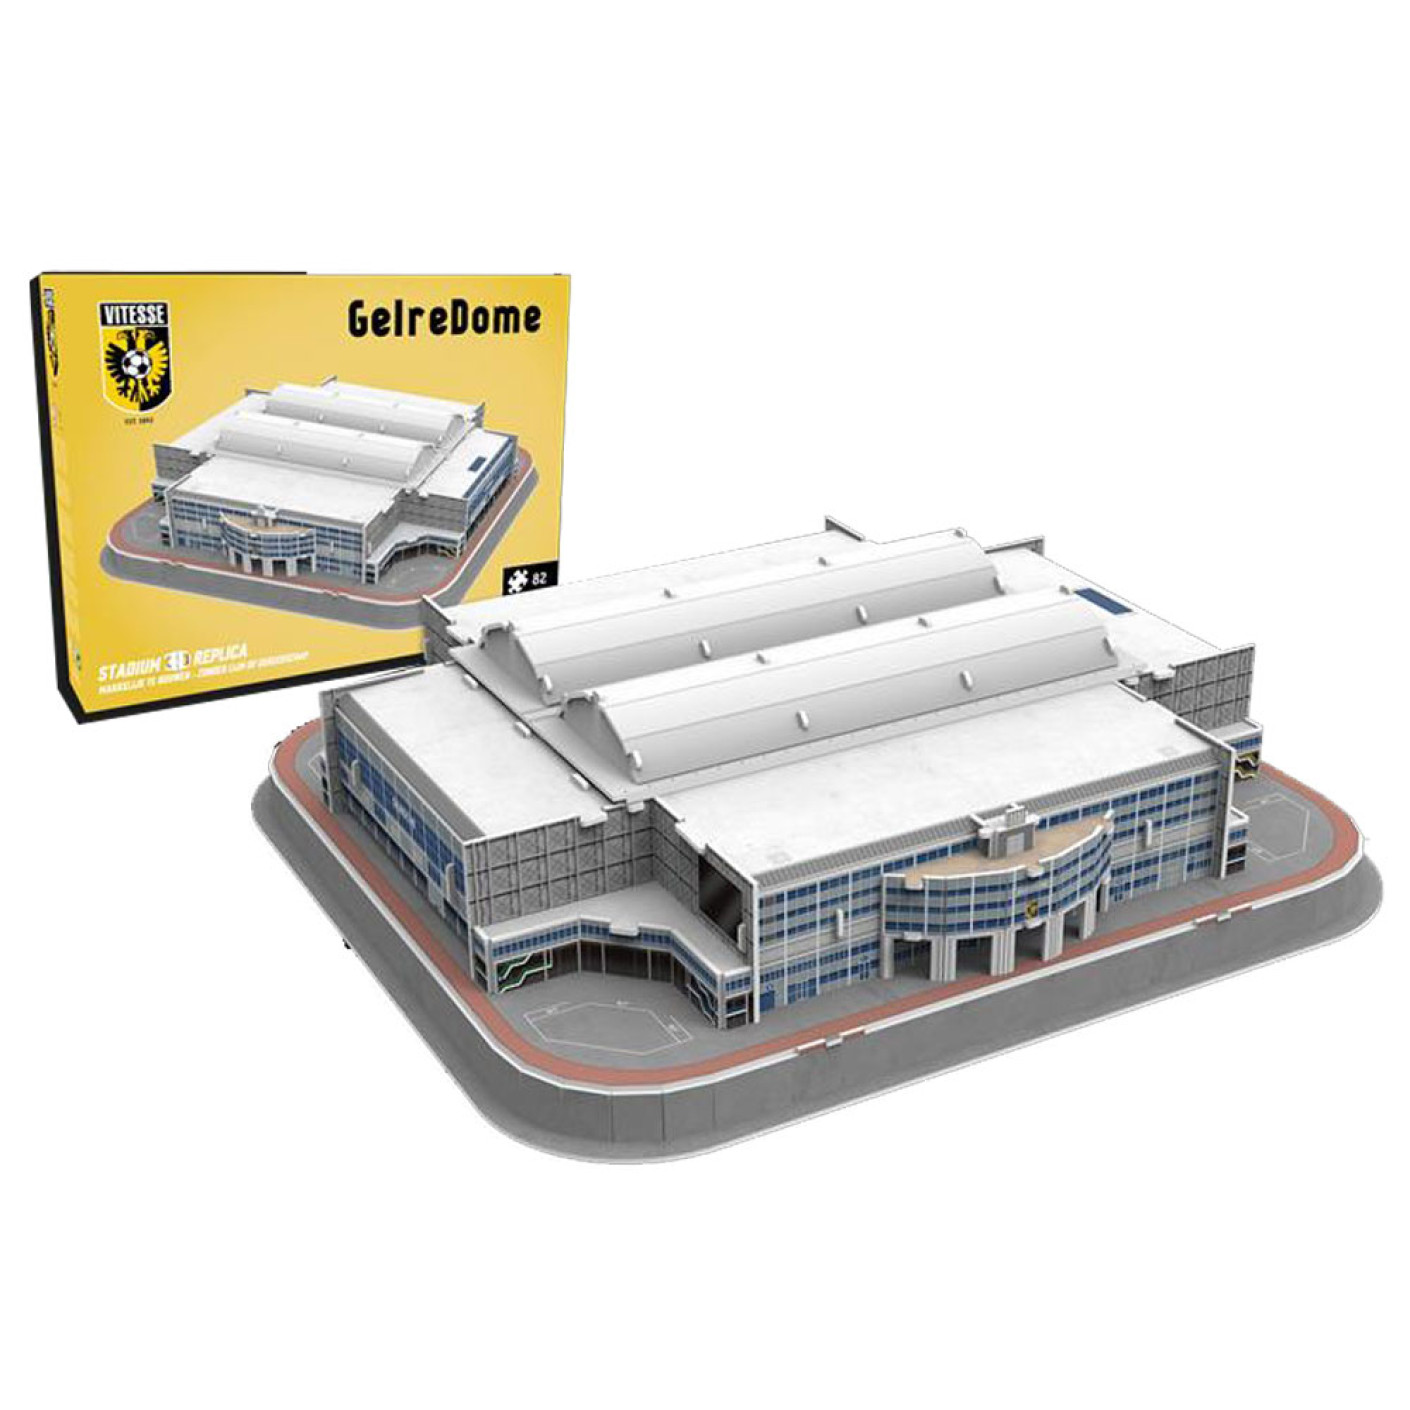 botsing Doornen Canberra Vitesse Stadion Gelredome 3D Puzzel